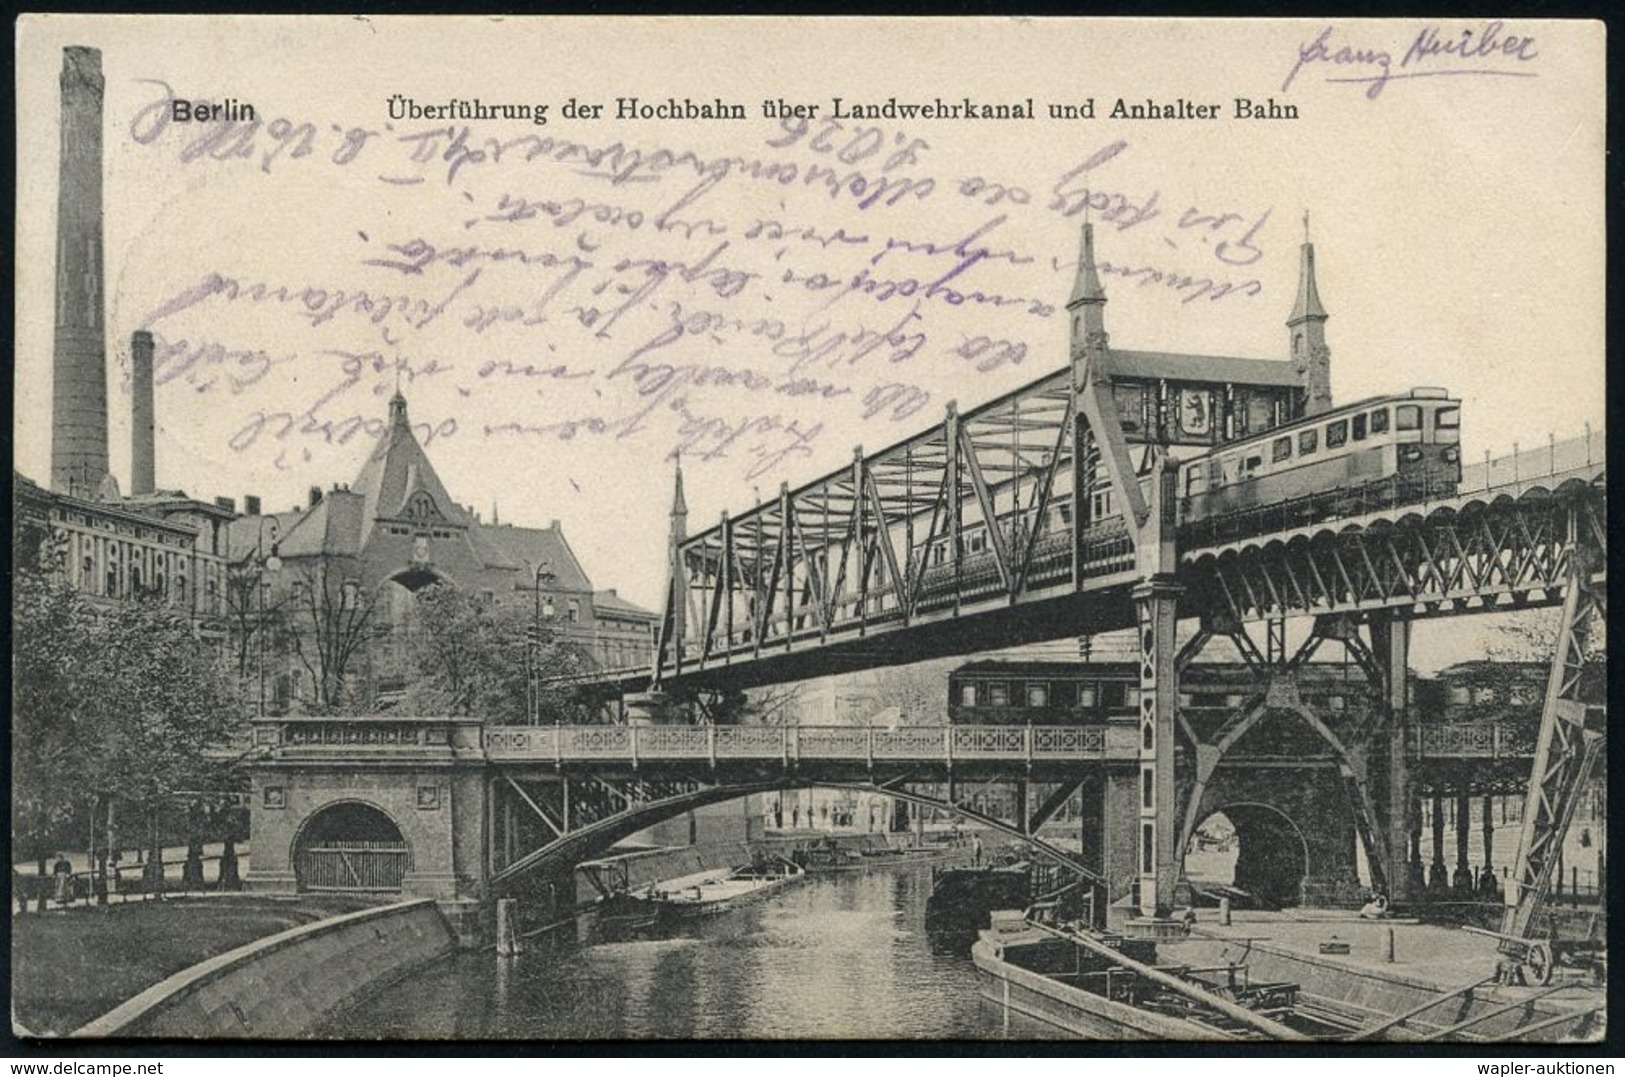 UNTERGRUNDBAHN /U-BAHN : Berlin-Kreuzberg 1908/25 U-Bahn Landwehrkanal/Anhalter Bhf., 12 verschiedene s/w.-Foto-Ak. , te